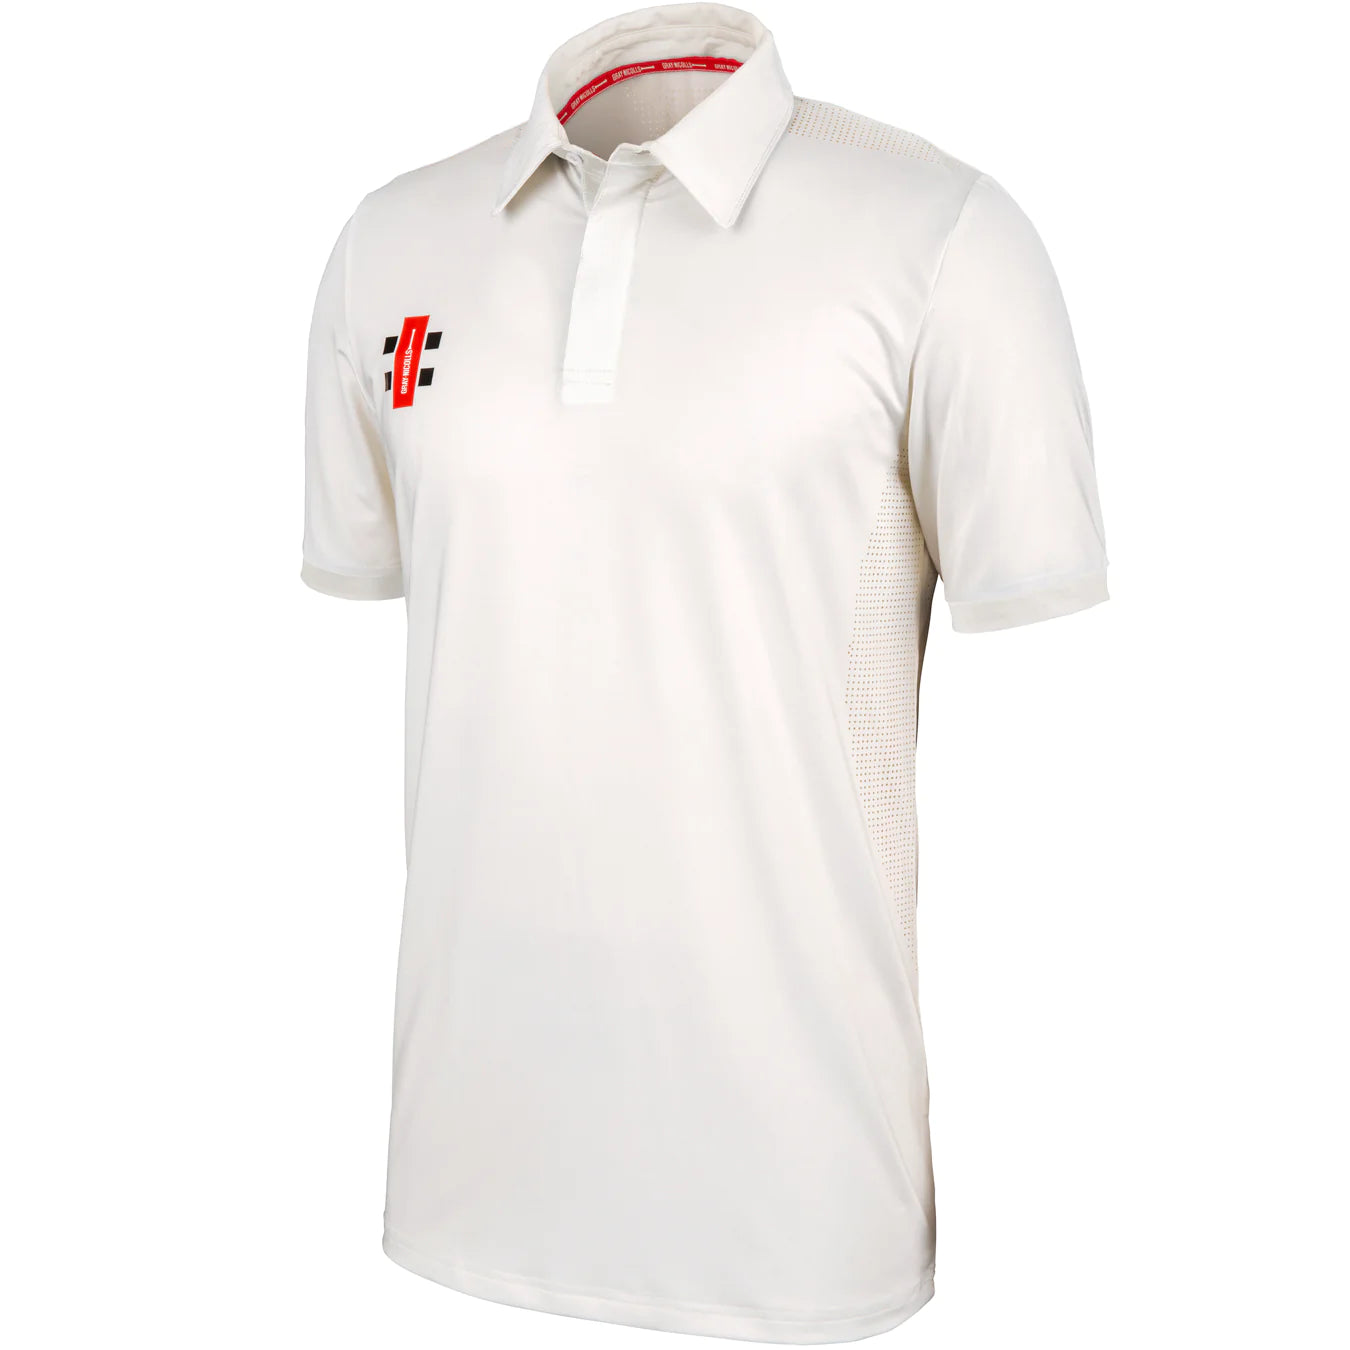 Gray-Nicolls 10 Pro Performance Cricket Short Sleeve Shirt